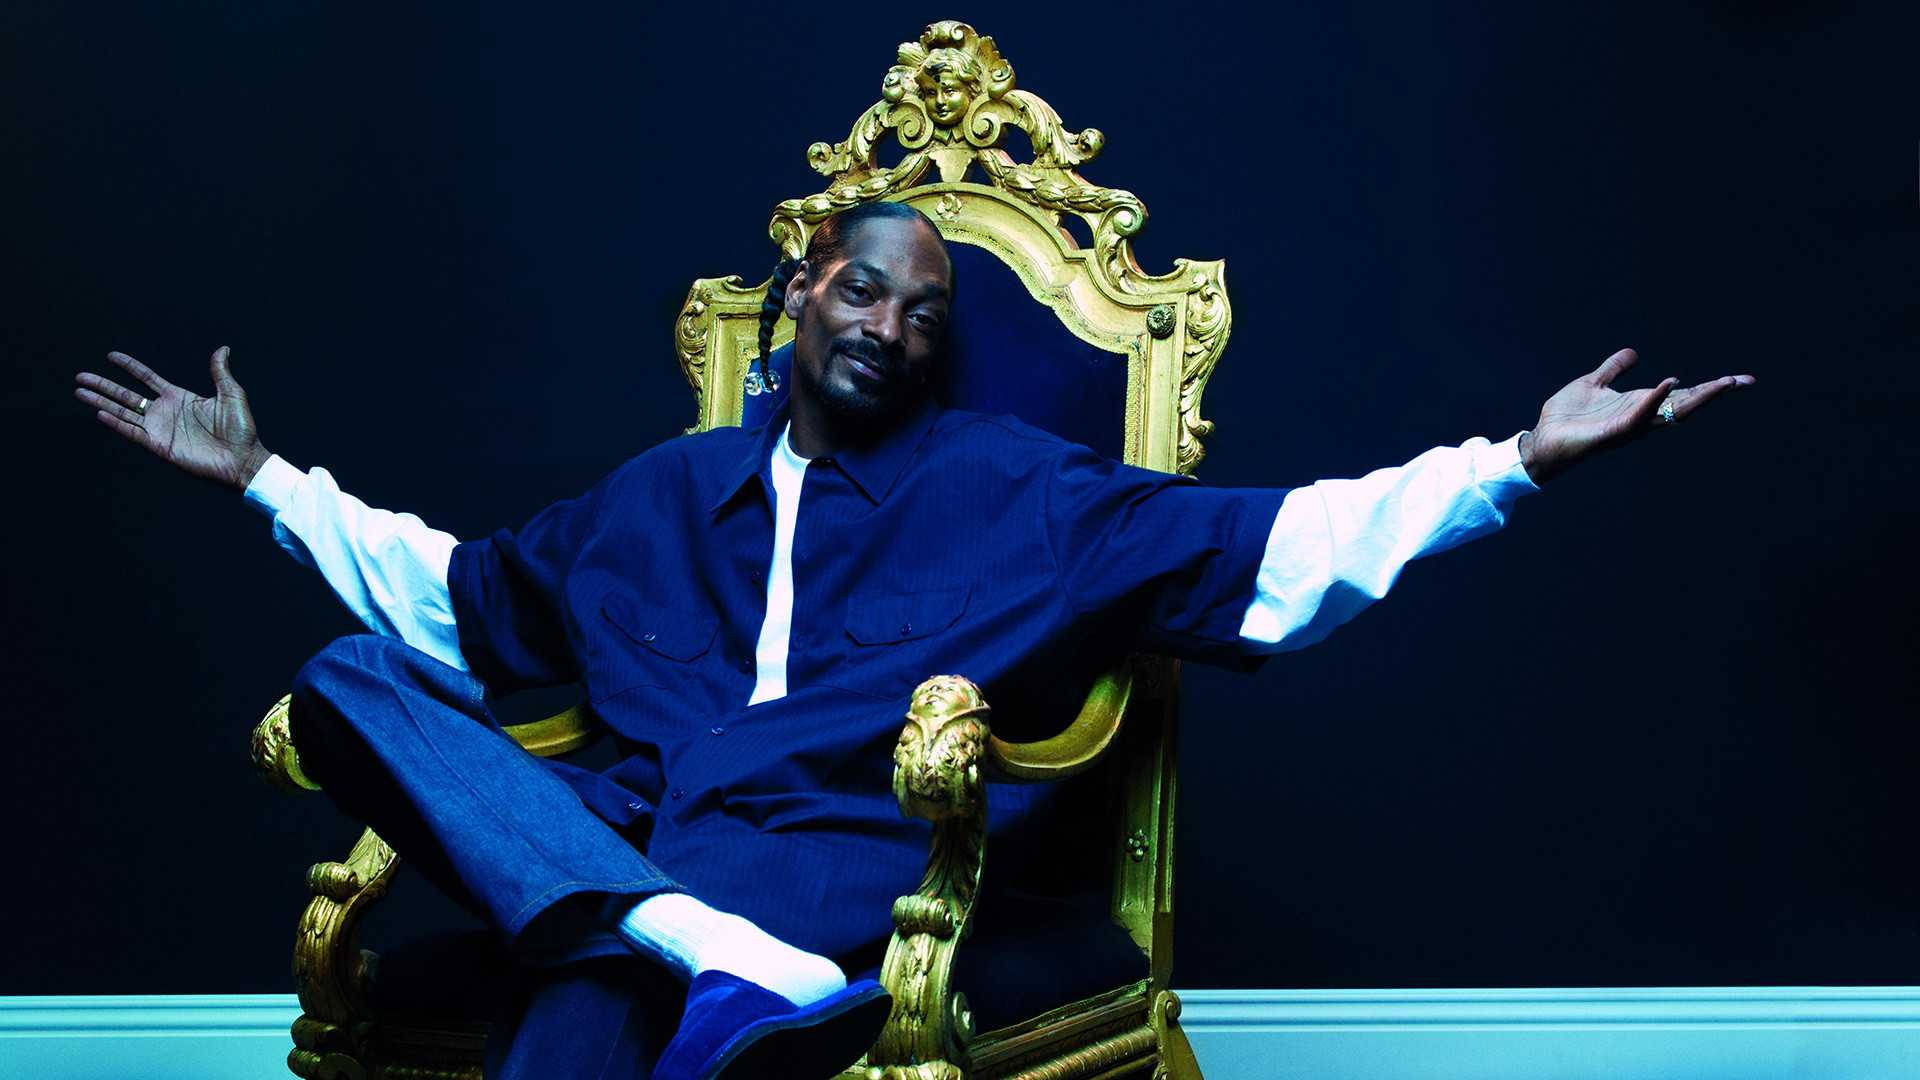 Snoop Dogg On A Throne